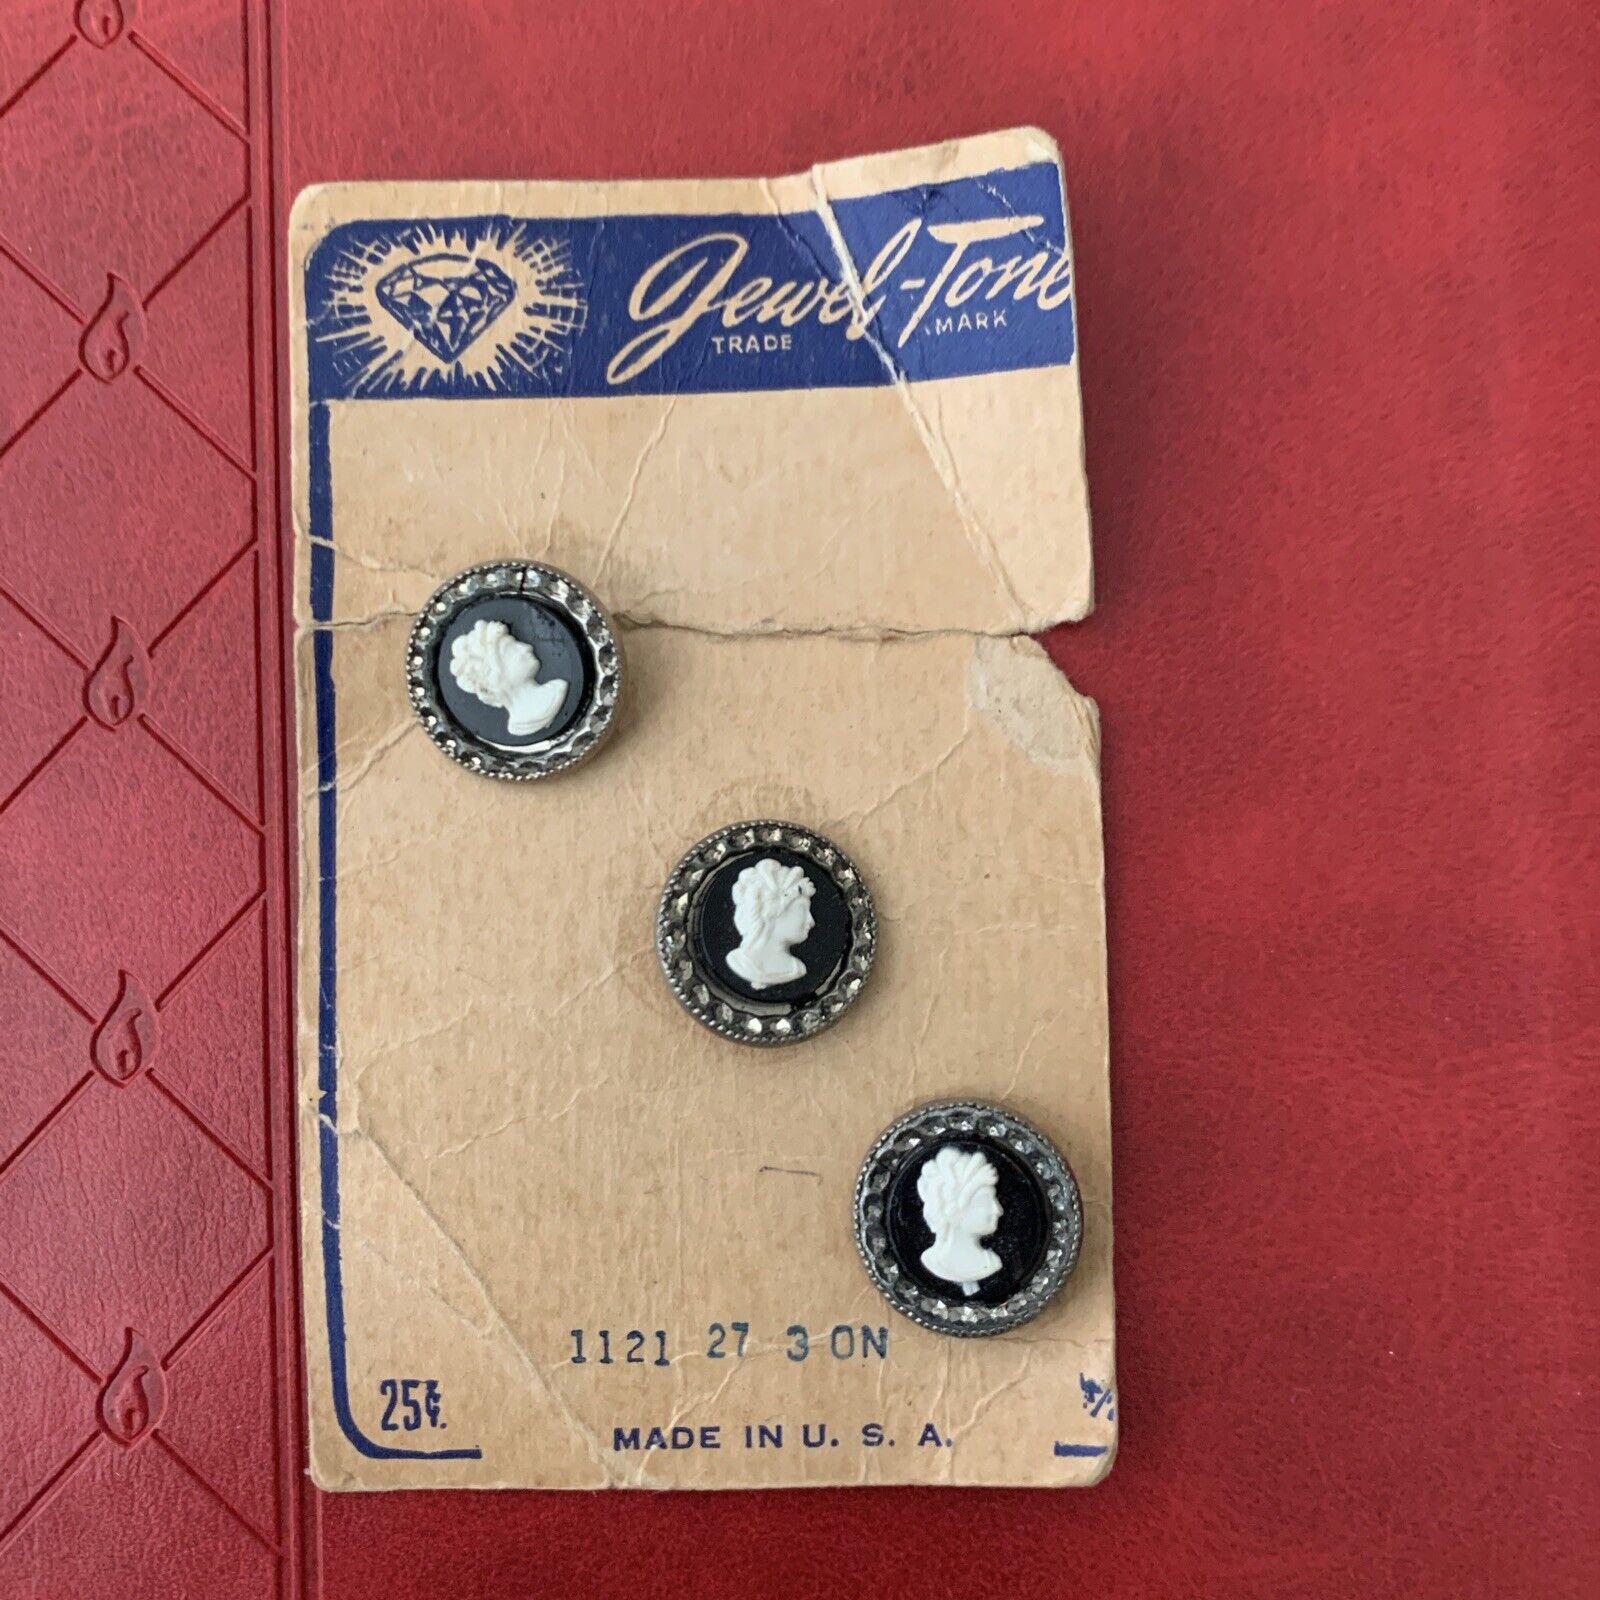 Jewel Tone vintage buttons ~ 3